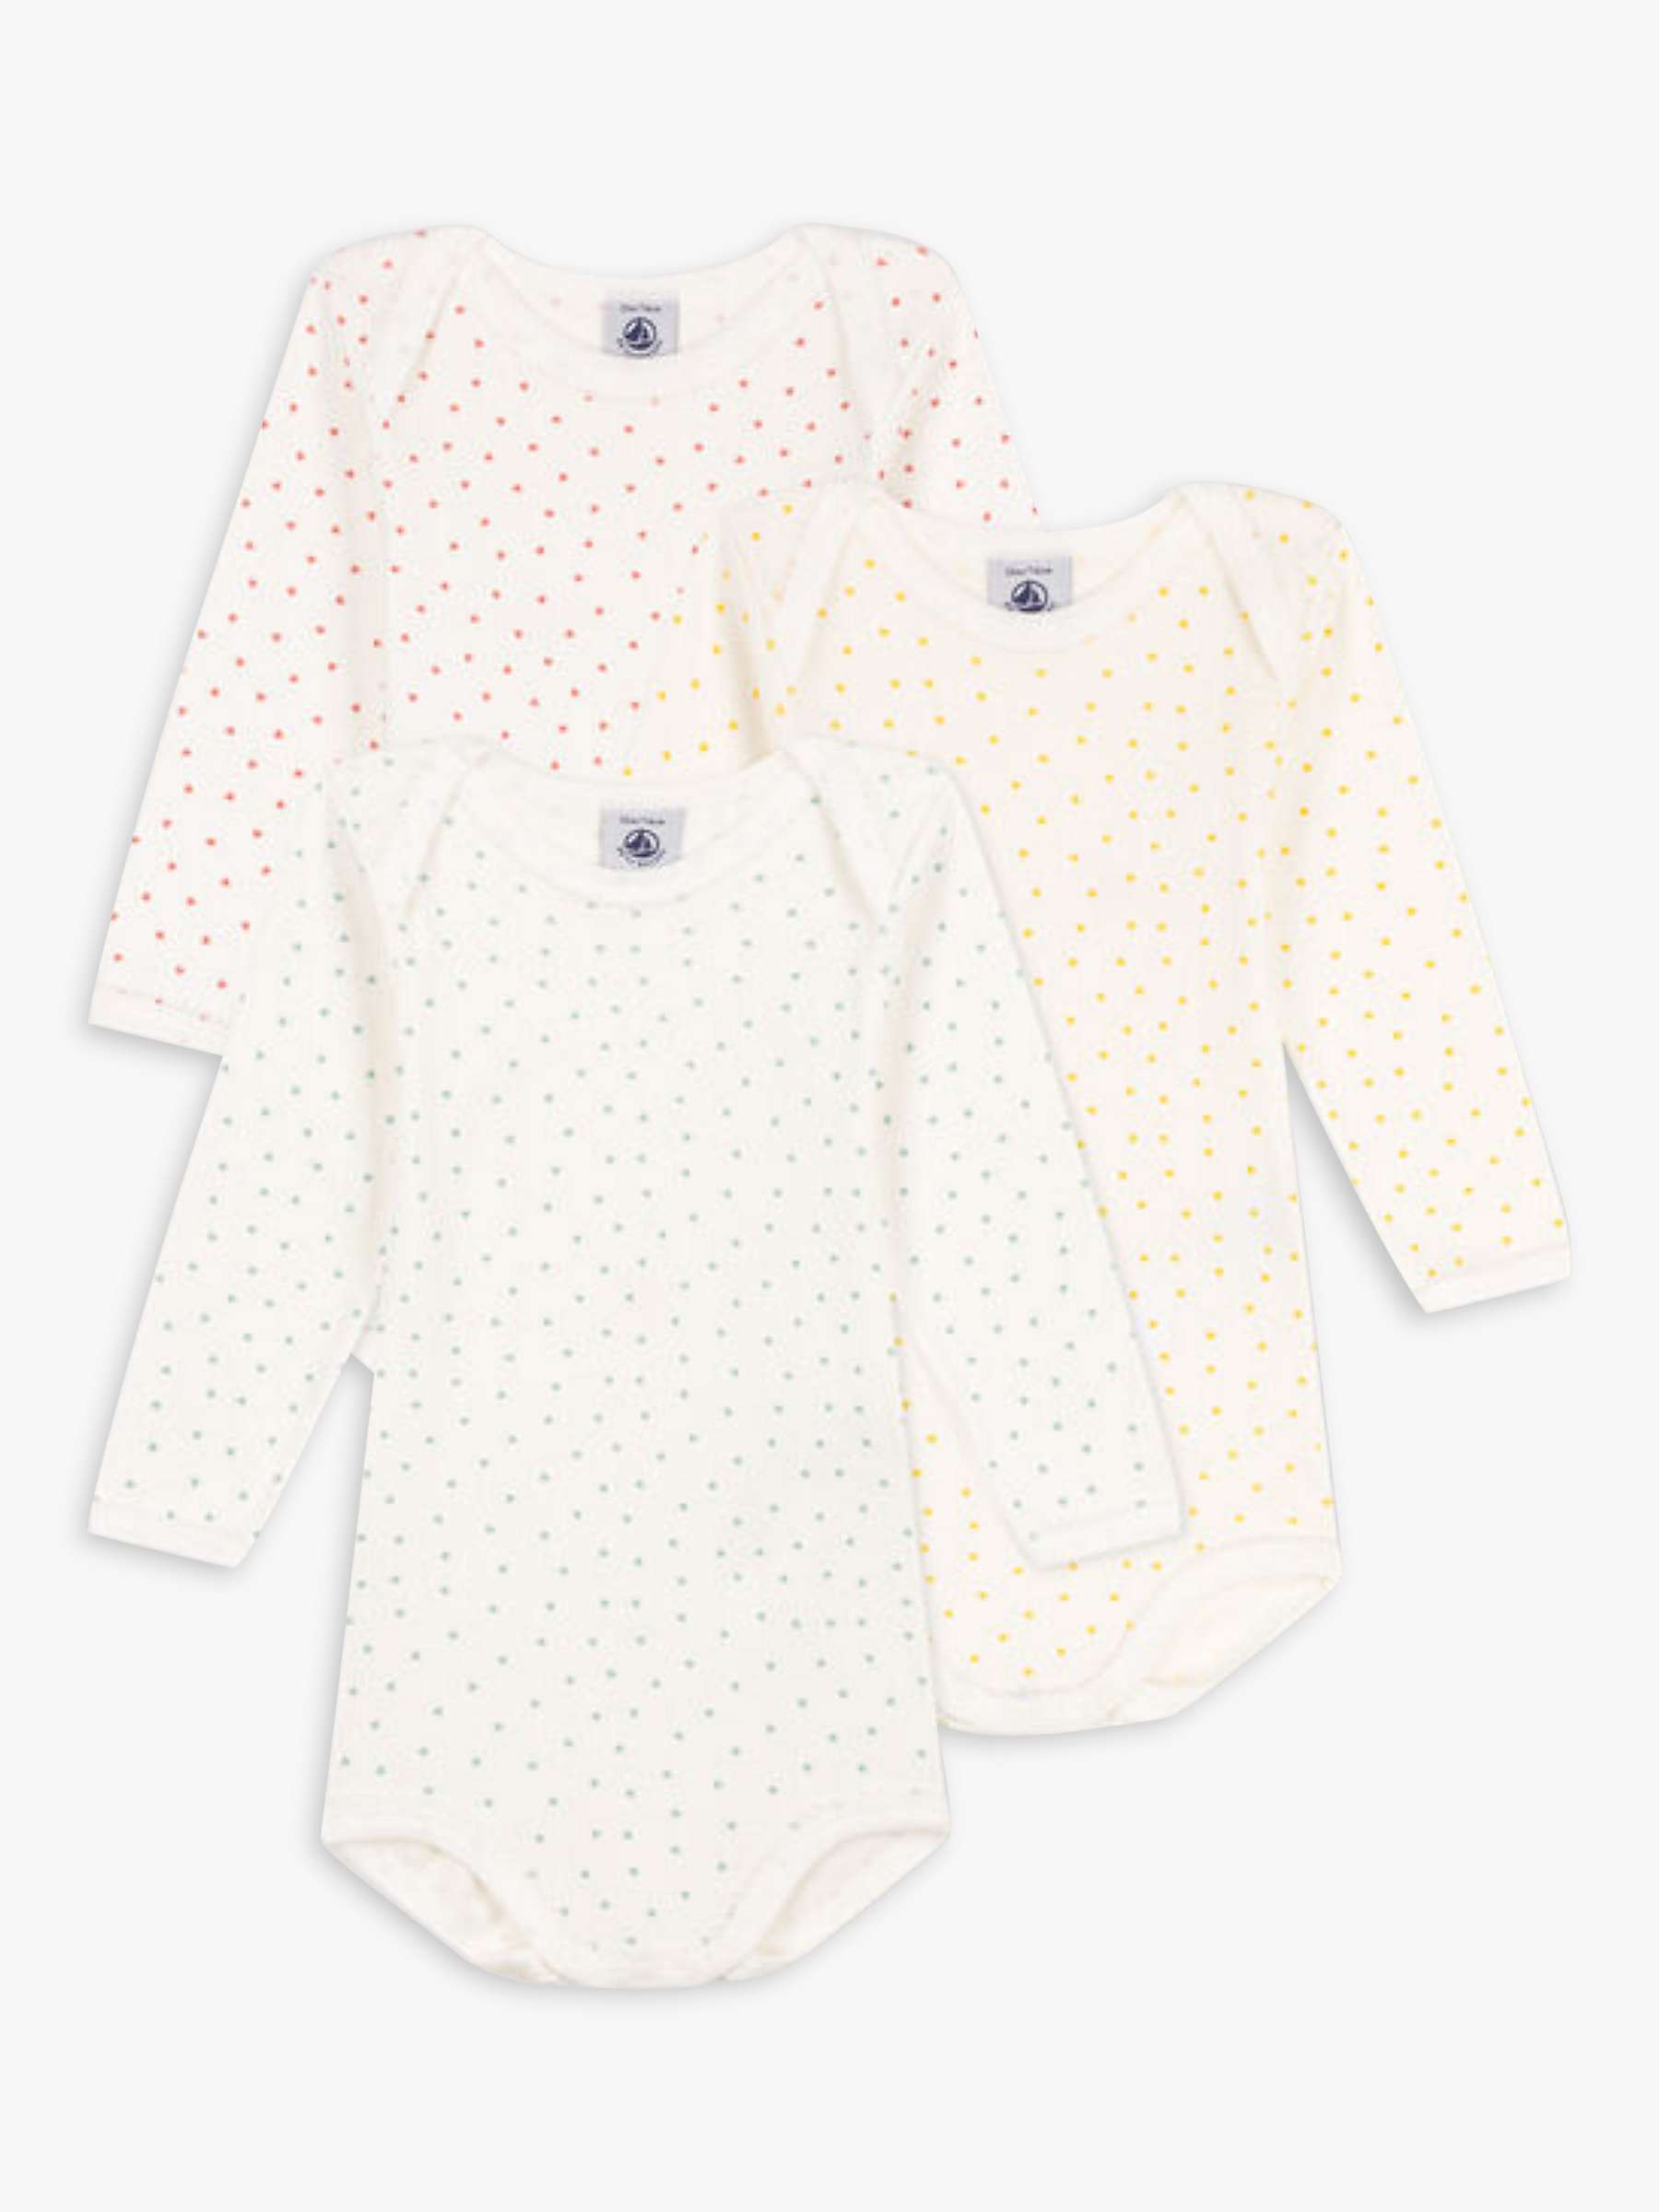 Buy Petit Bateau Baby Heart Long Sleeve Bodysuit, Pack of 3, White/Multi Online at johnlewis.com